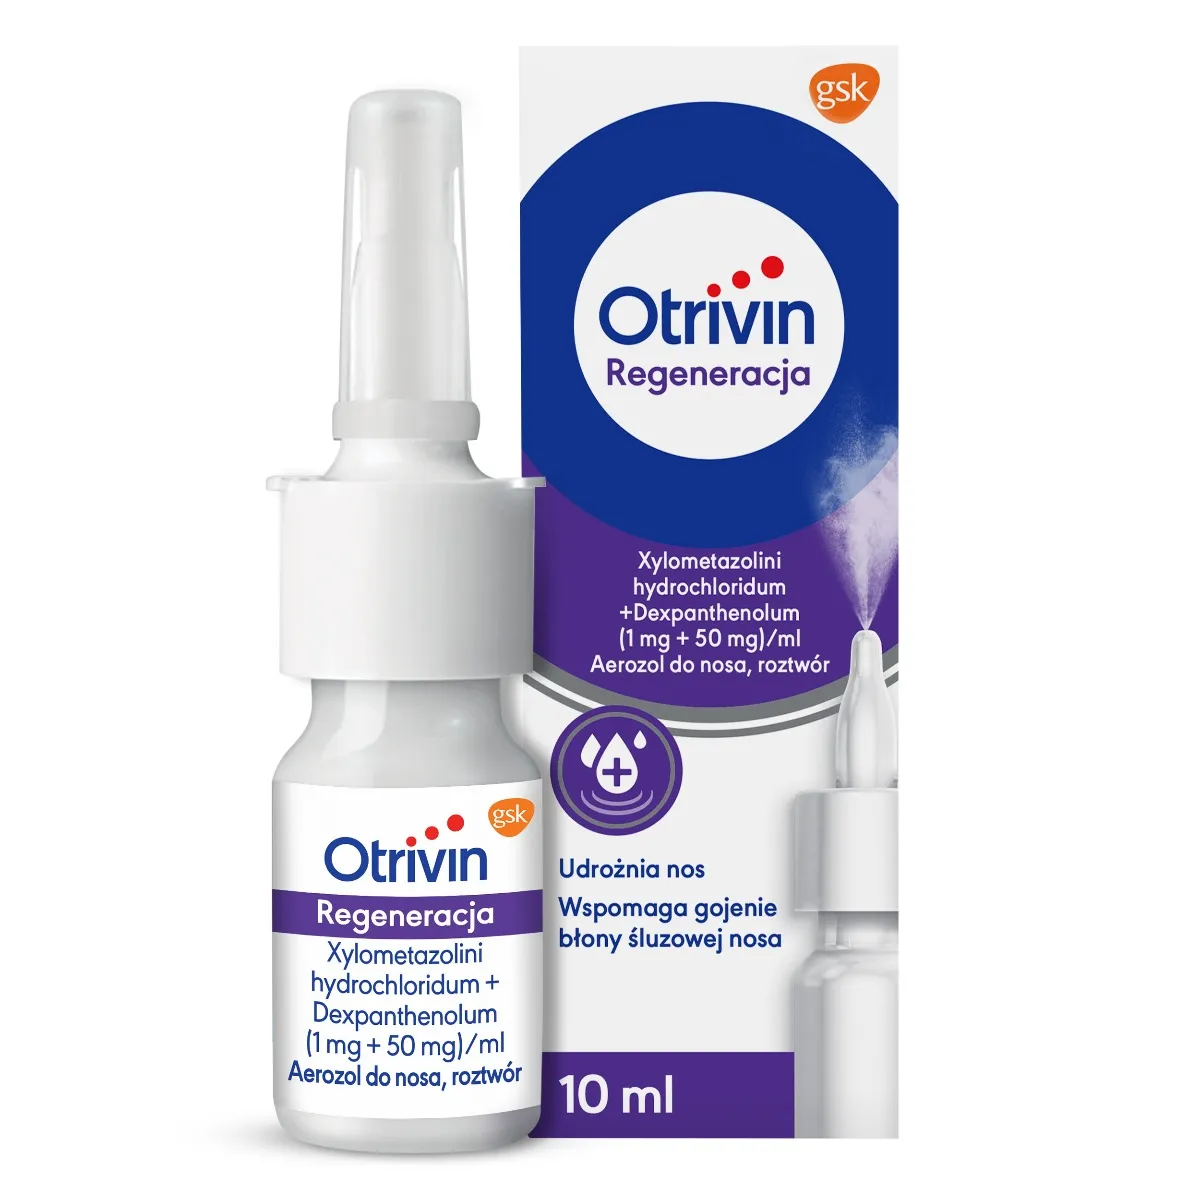 Otrivin Regeneracja, 1mg + 50mg/ml, aerozol do nosa, 10 ml 